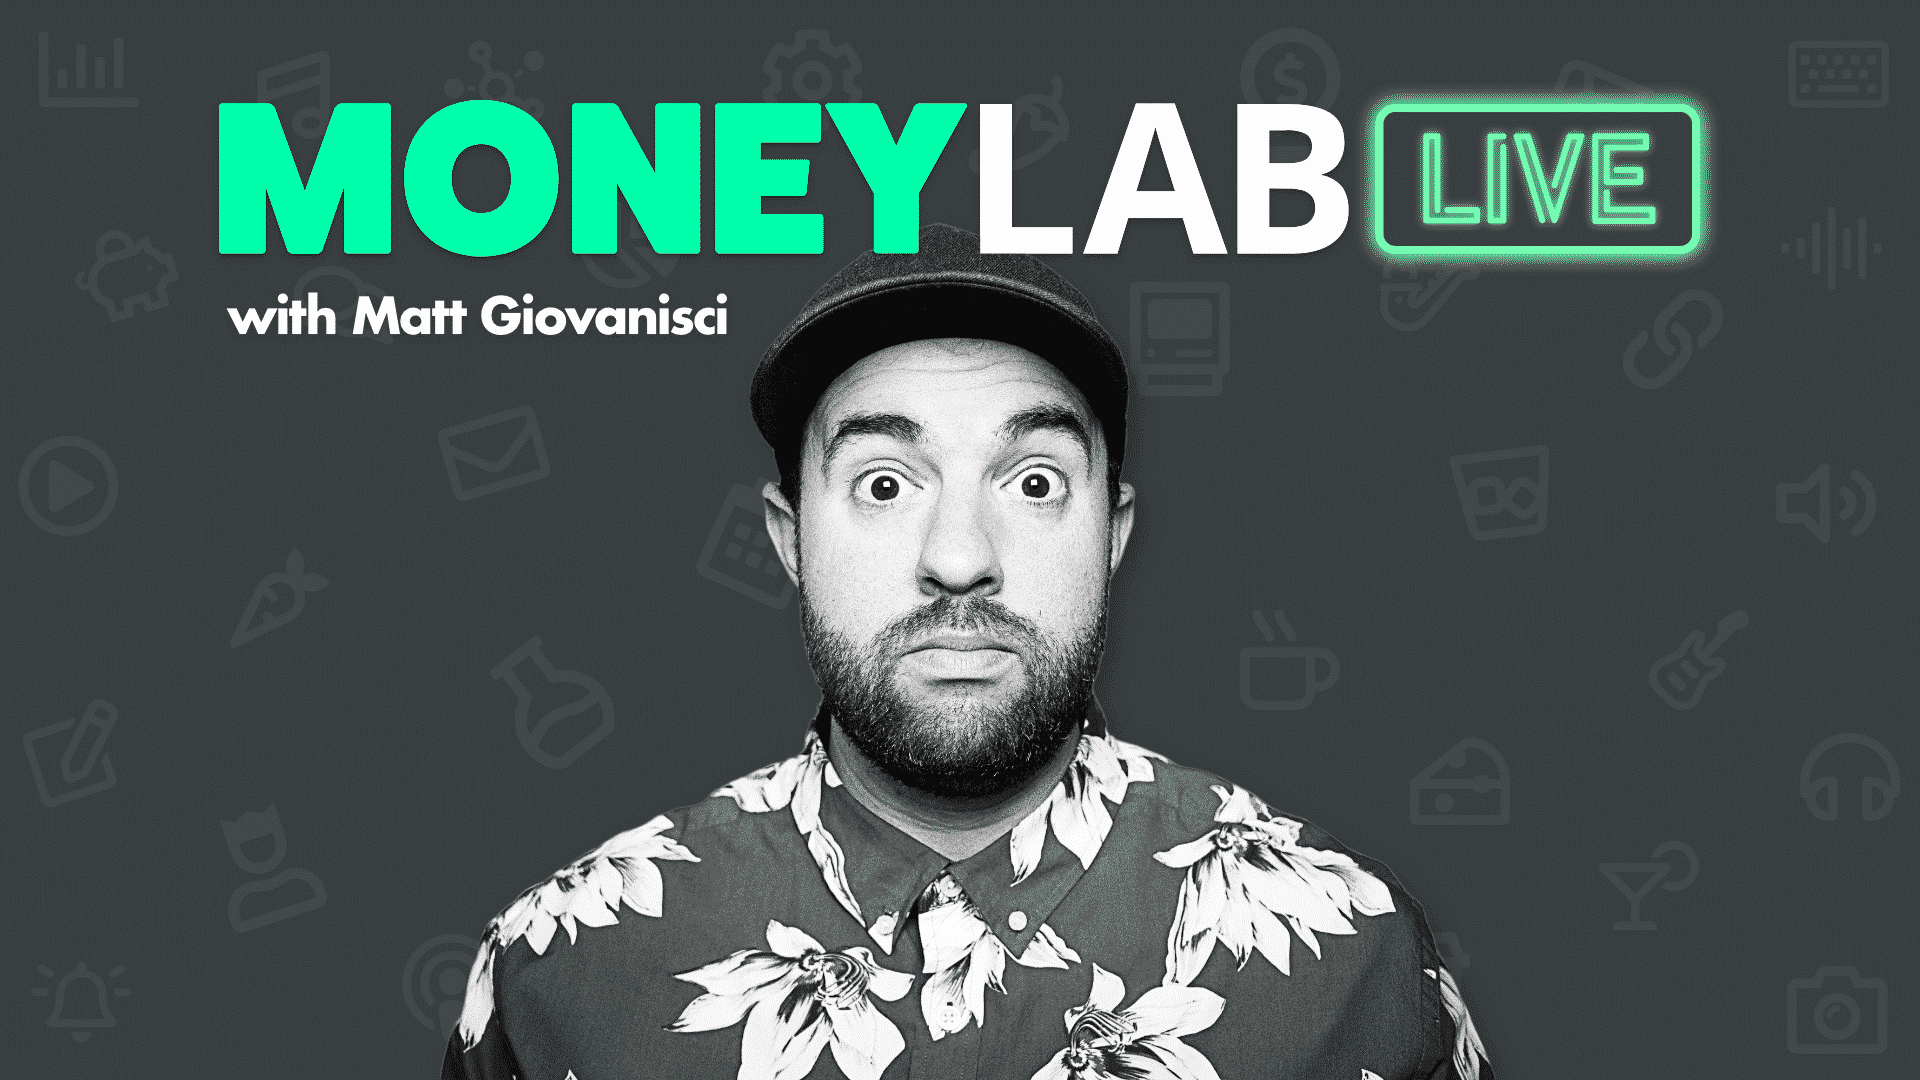 The Money Lab Live Experiment